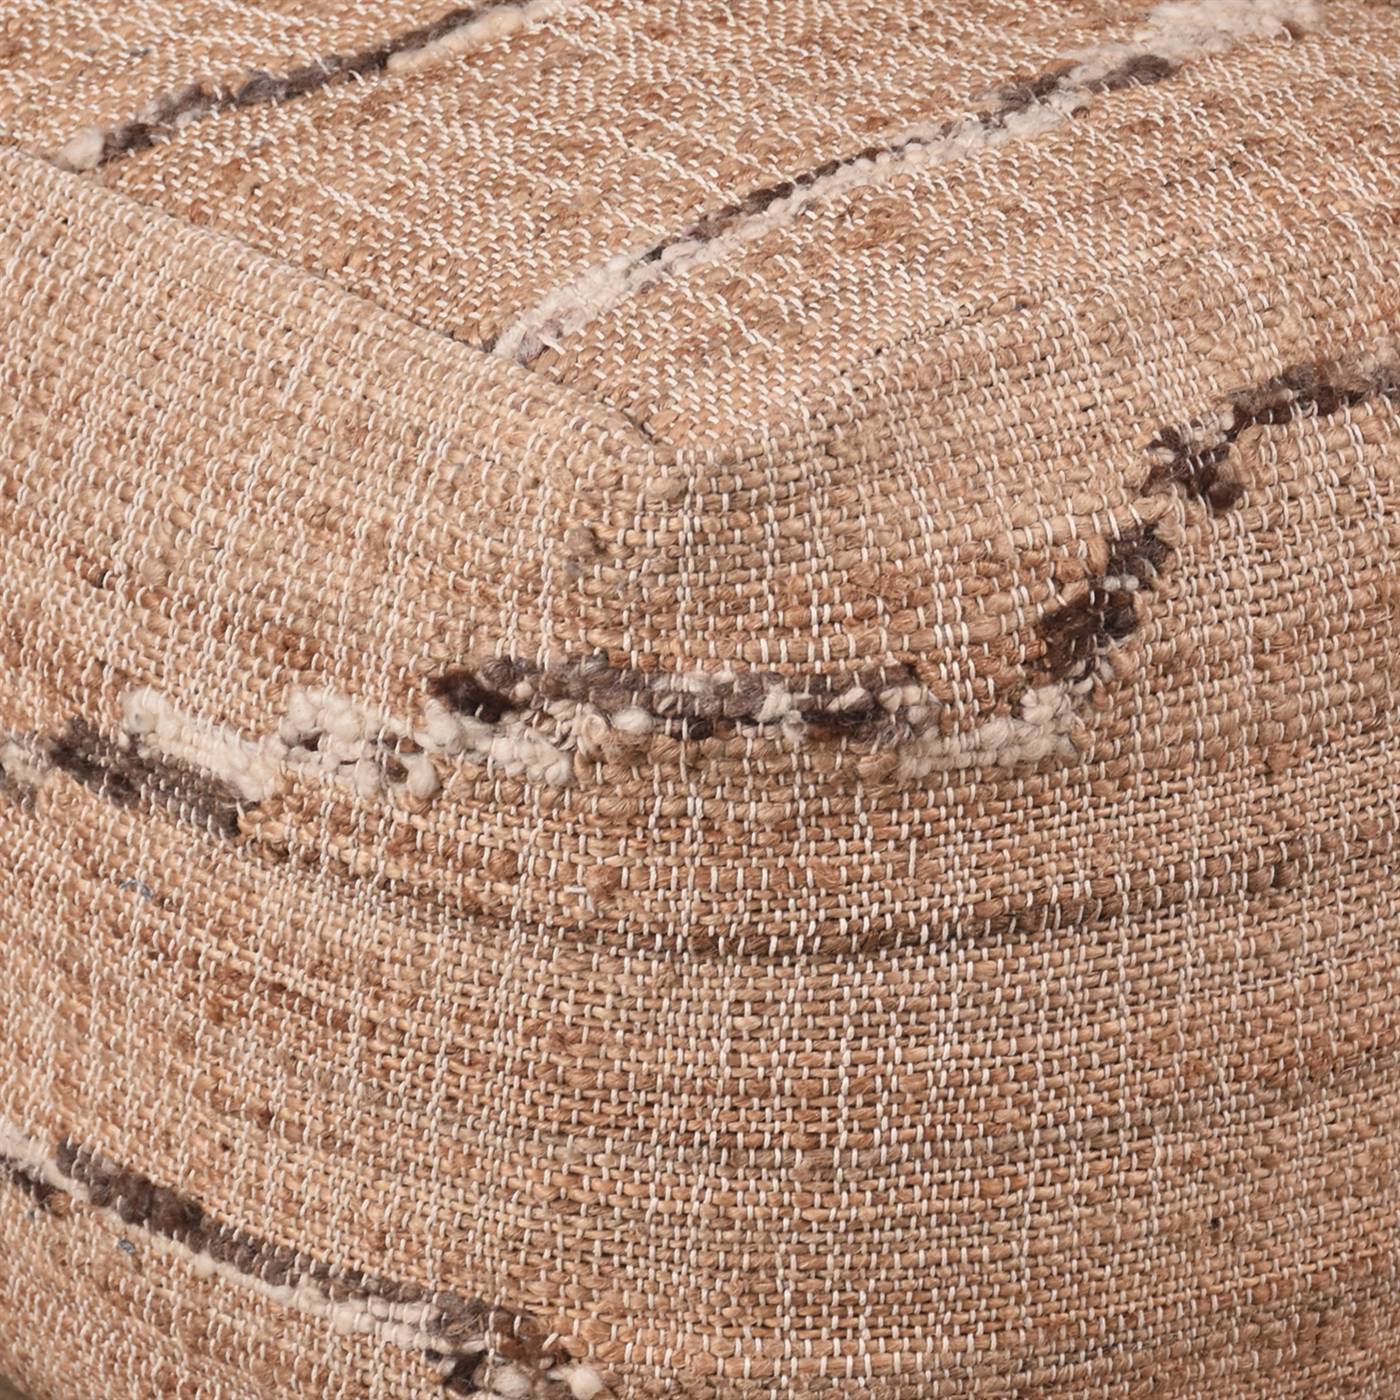 Grebe Pouf, 40x40x40 cm, Natural,  Brown, Jute, Wool, Hand Woven,  Pitloom, Flat Weave